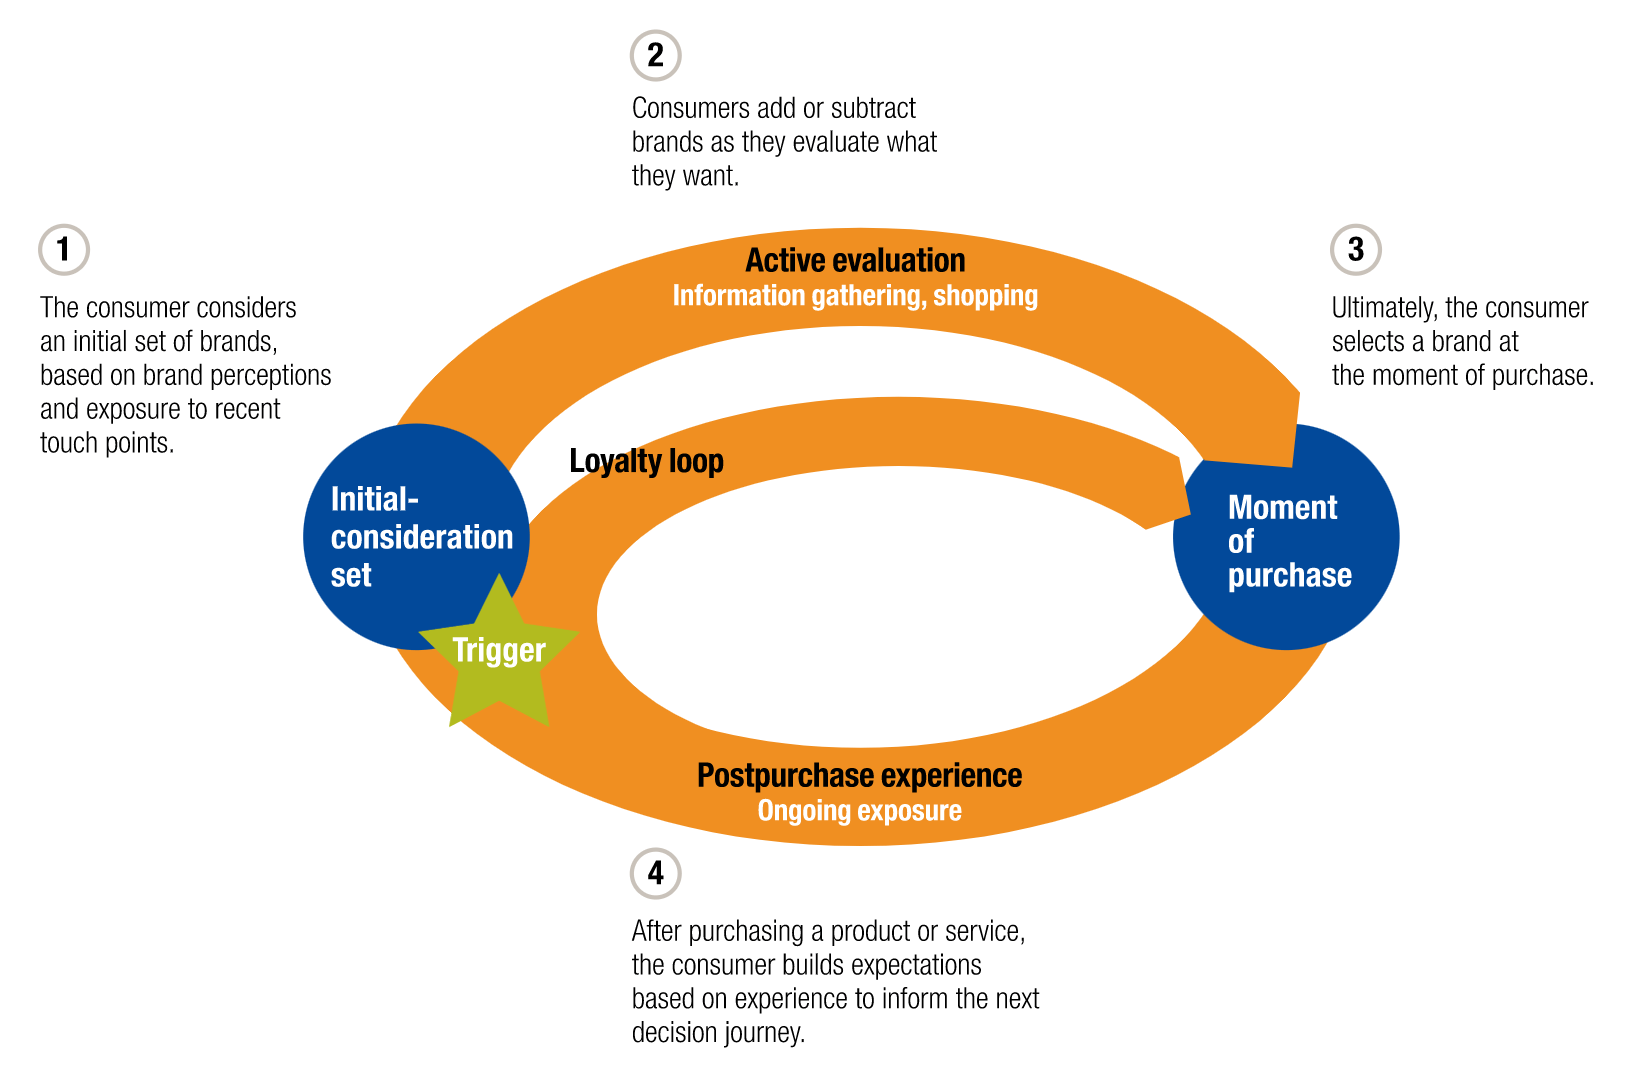 Customer journey models [McKinsey model & RACE Framework]